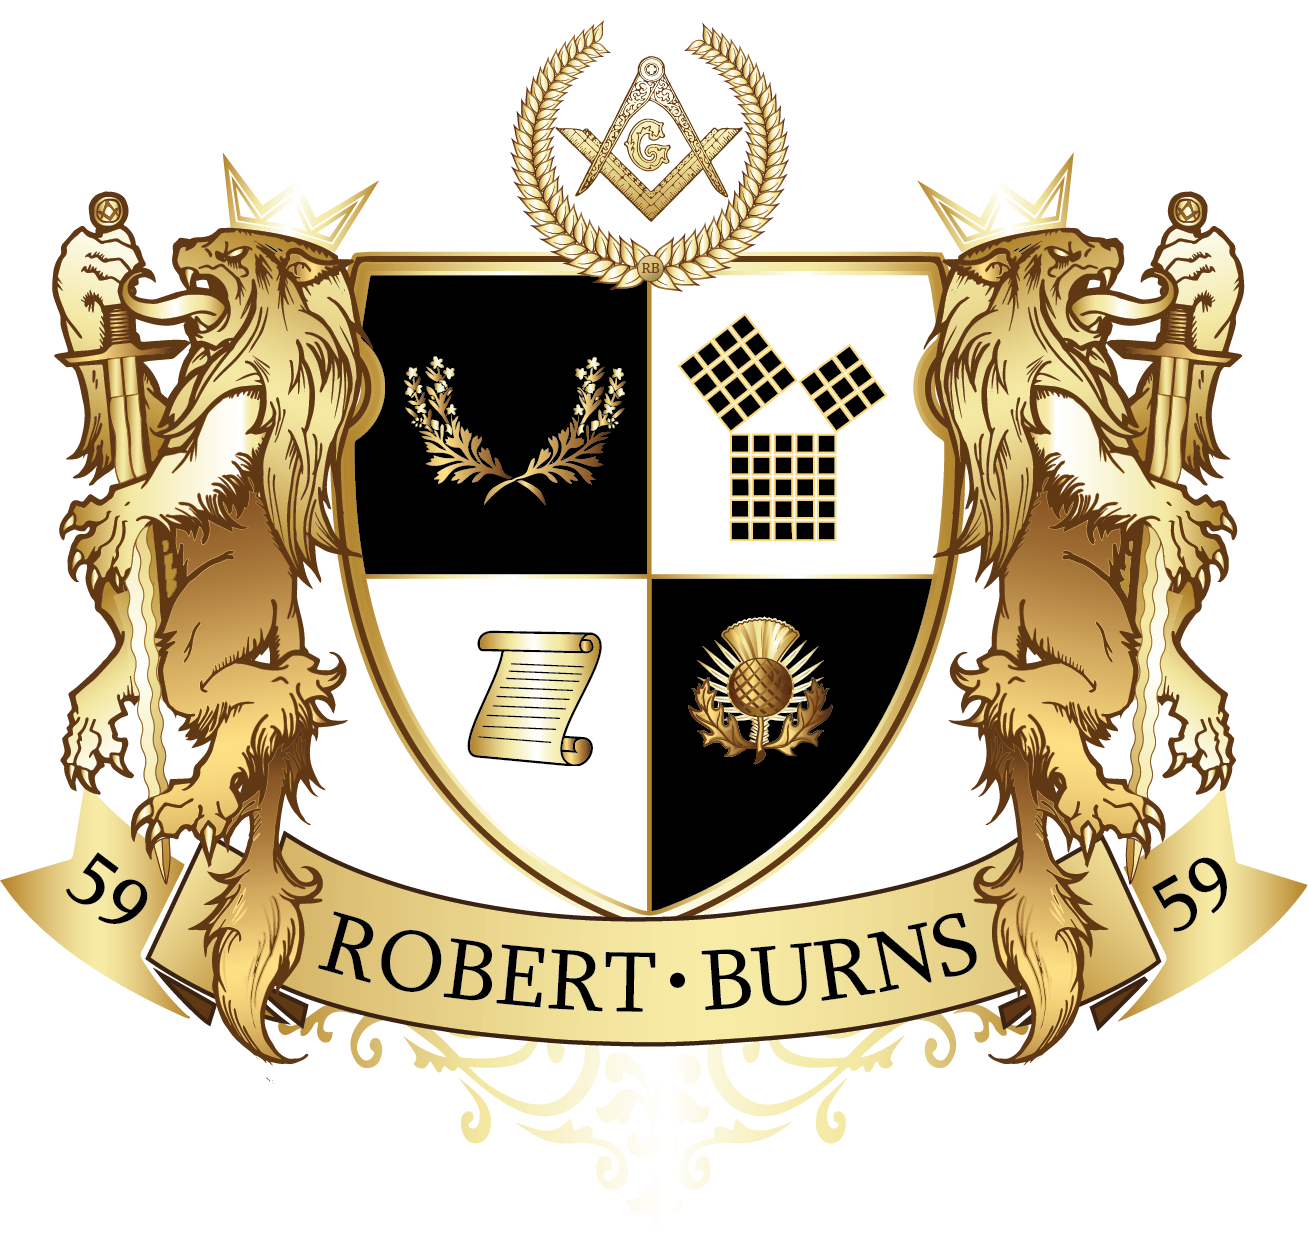 Robert Burns Lodge No. 59